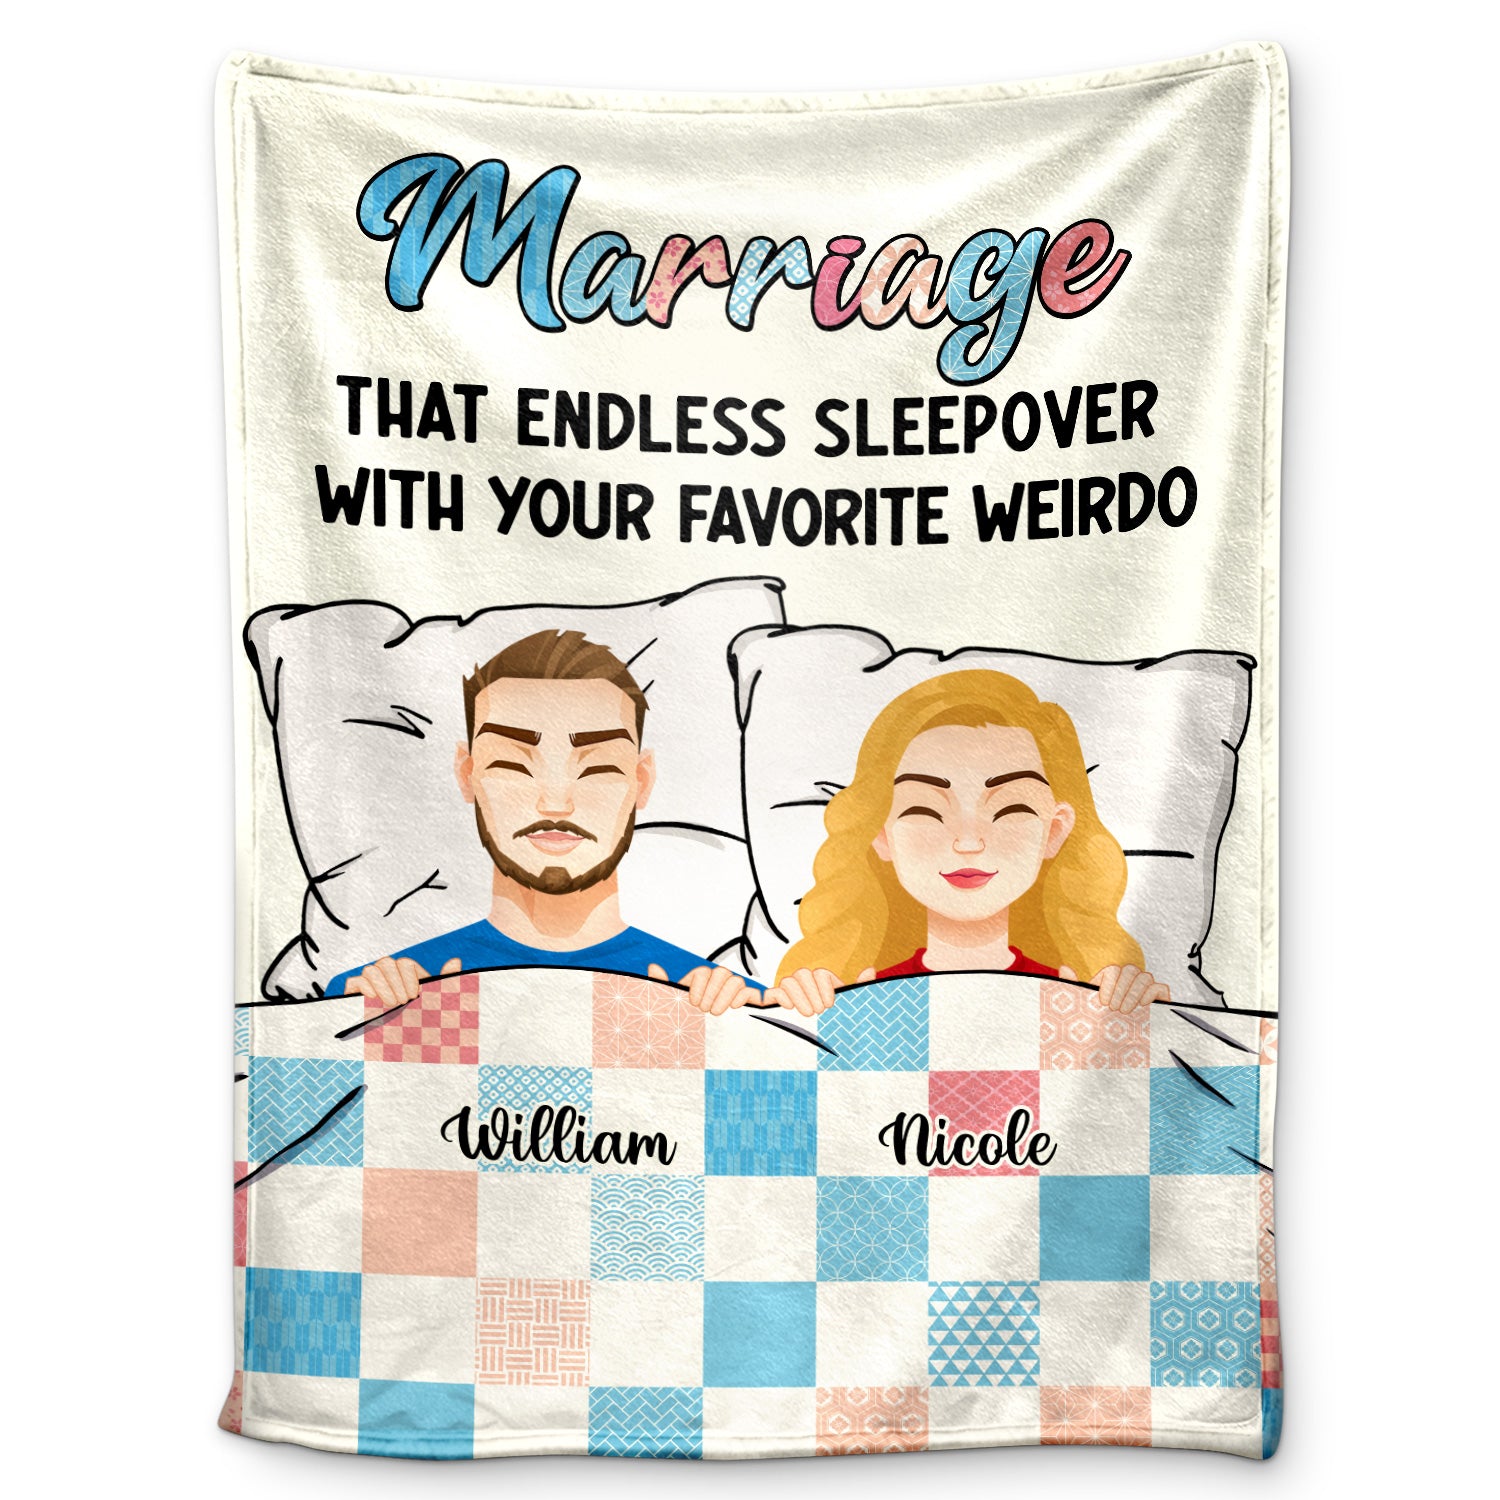 Endless Sleepover - Gift For Couples - Personalized Fleece Blanket, Sherpa Blanket